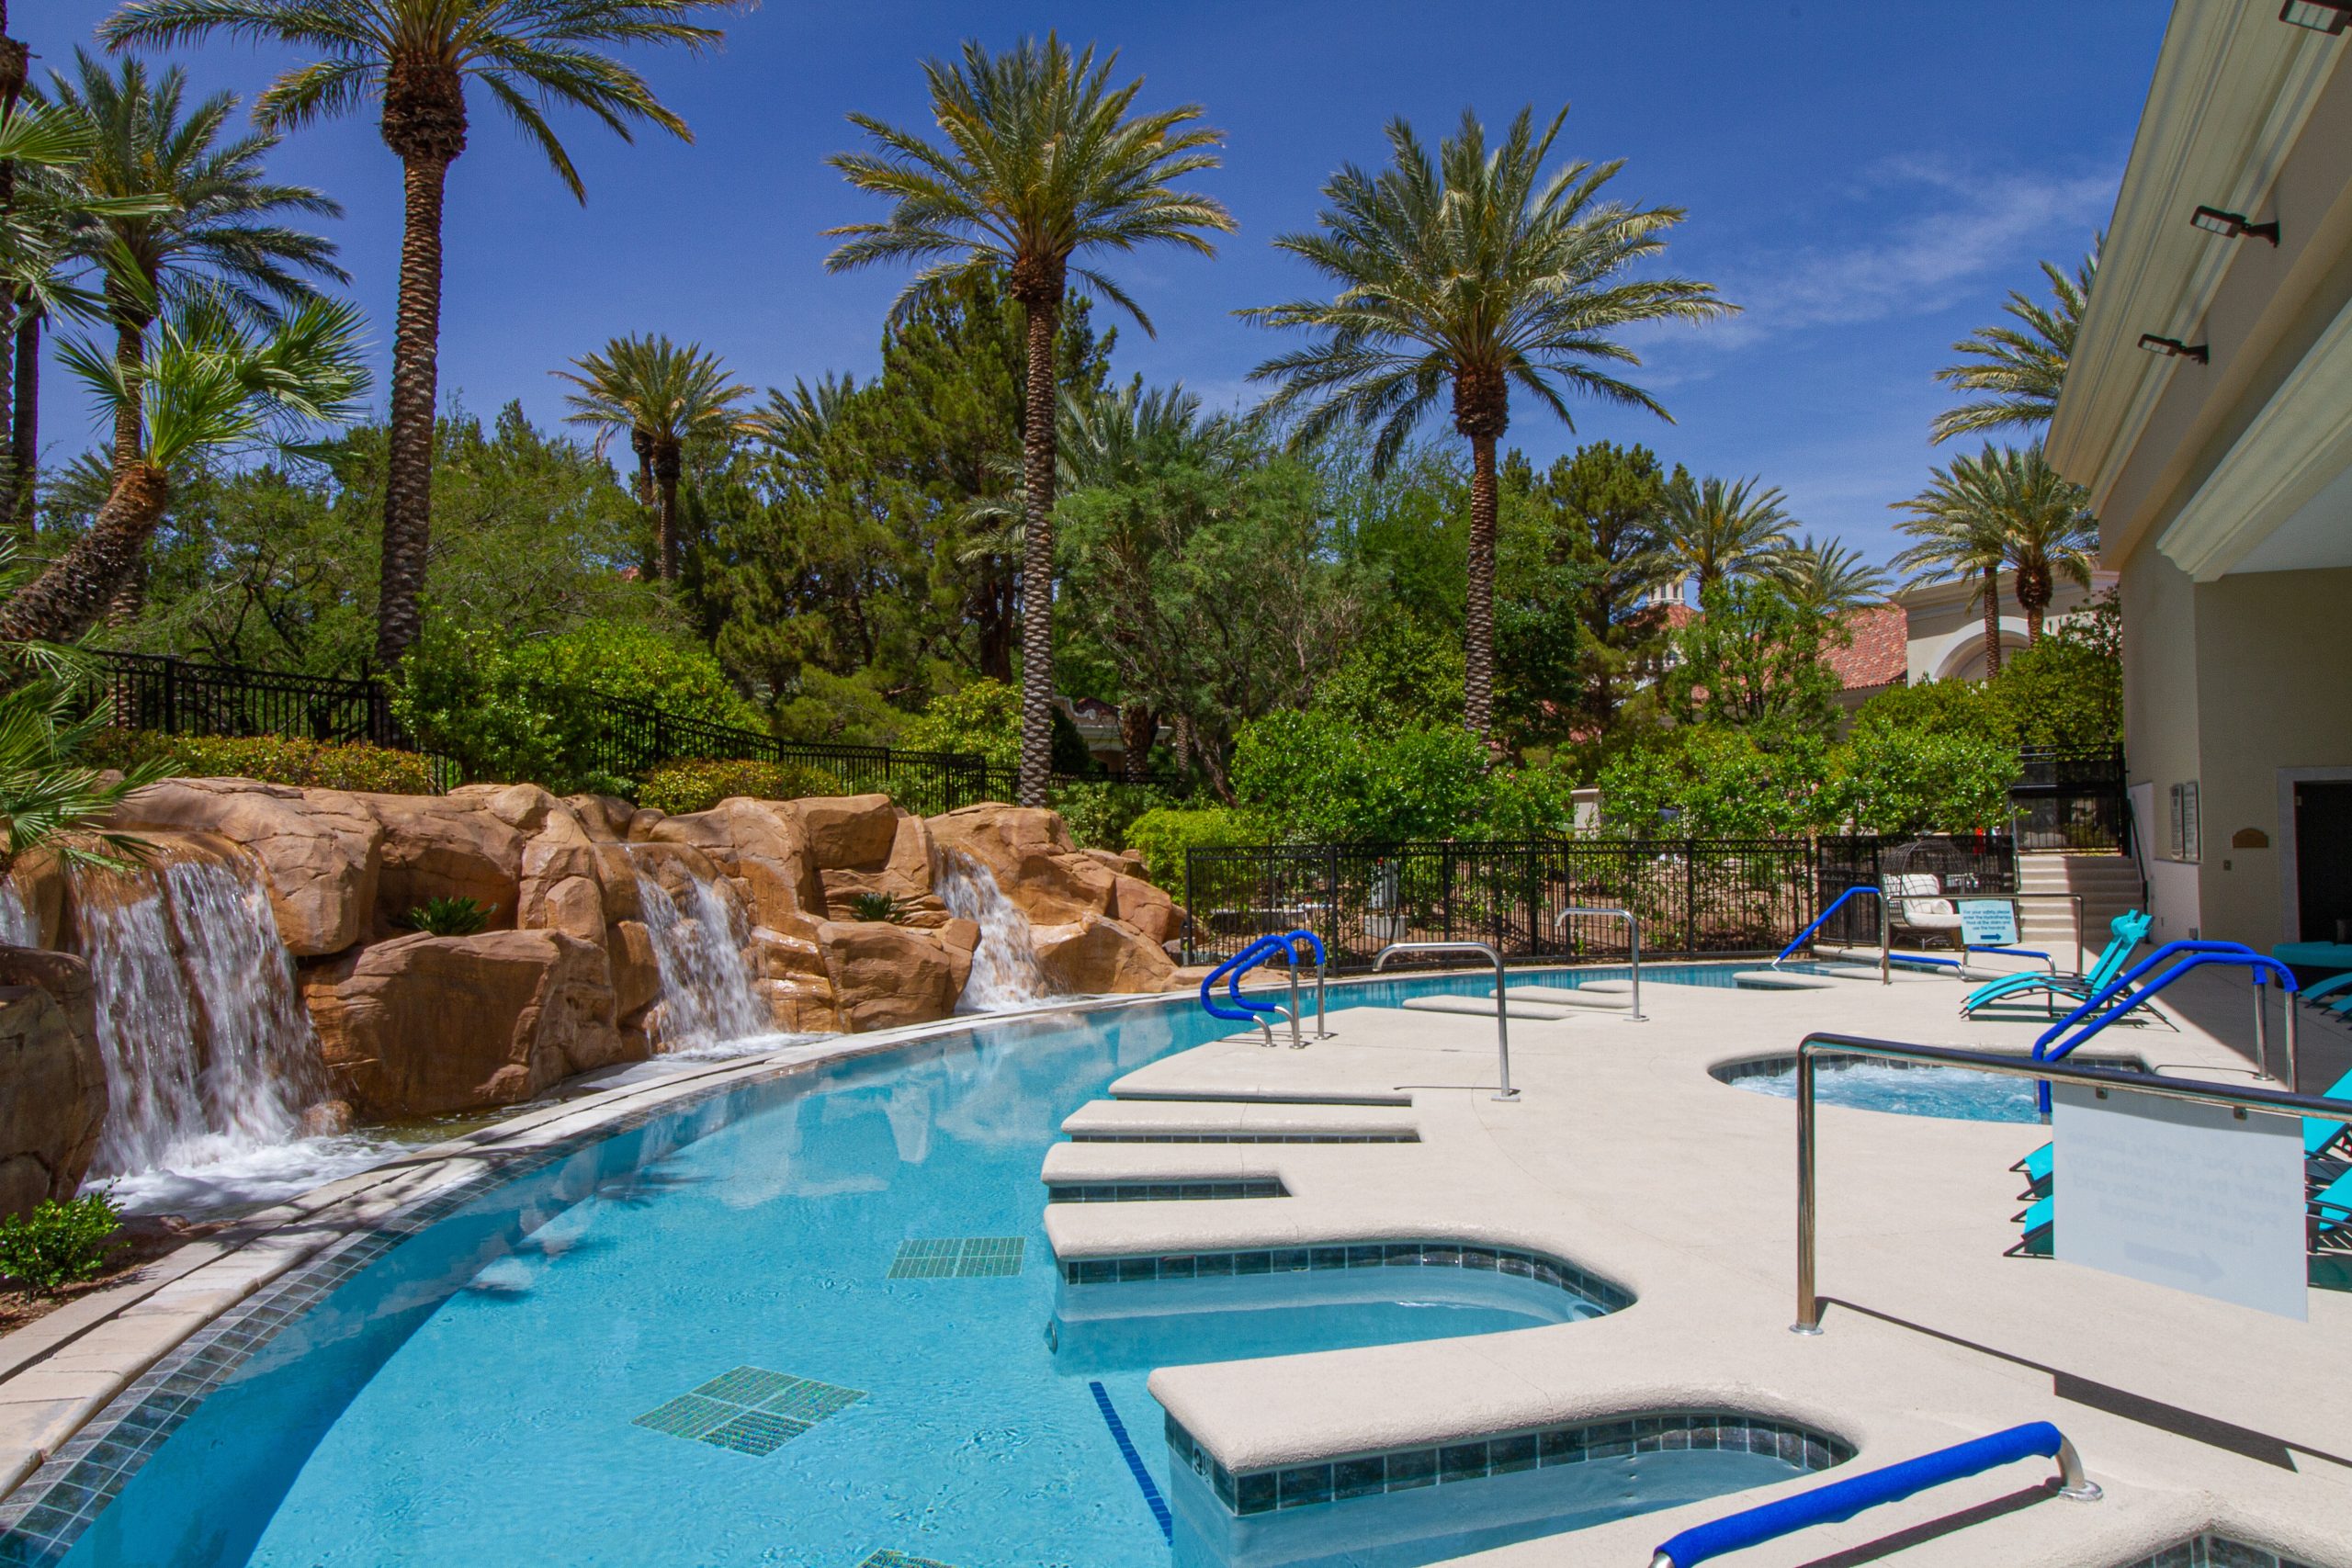 Hydro Therapy Pool & Hydra Lounge at Spa Aquae Las Vegas |